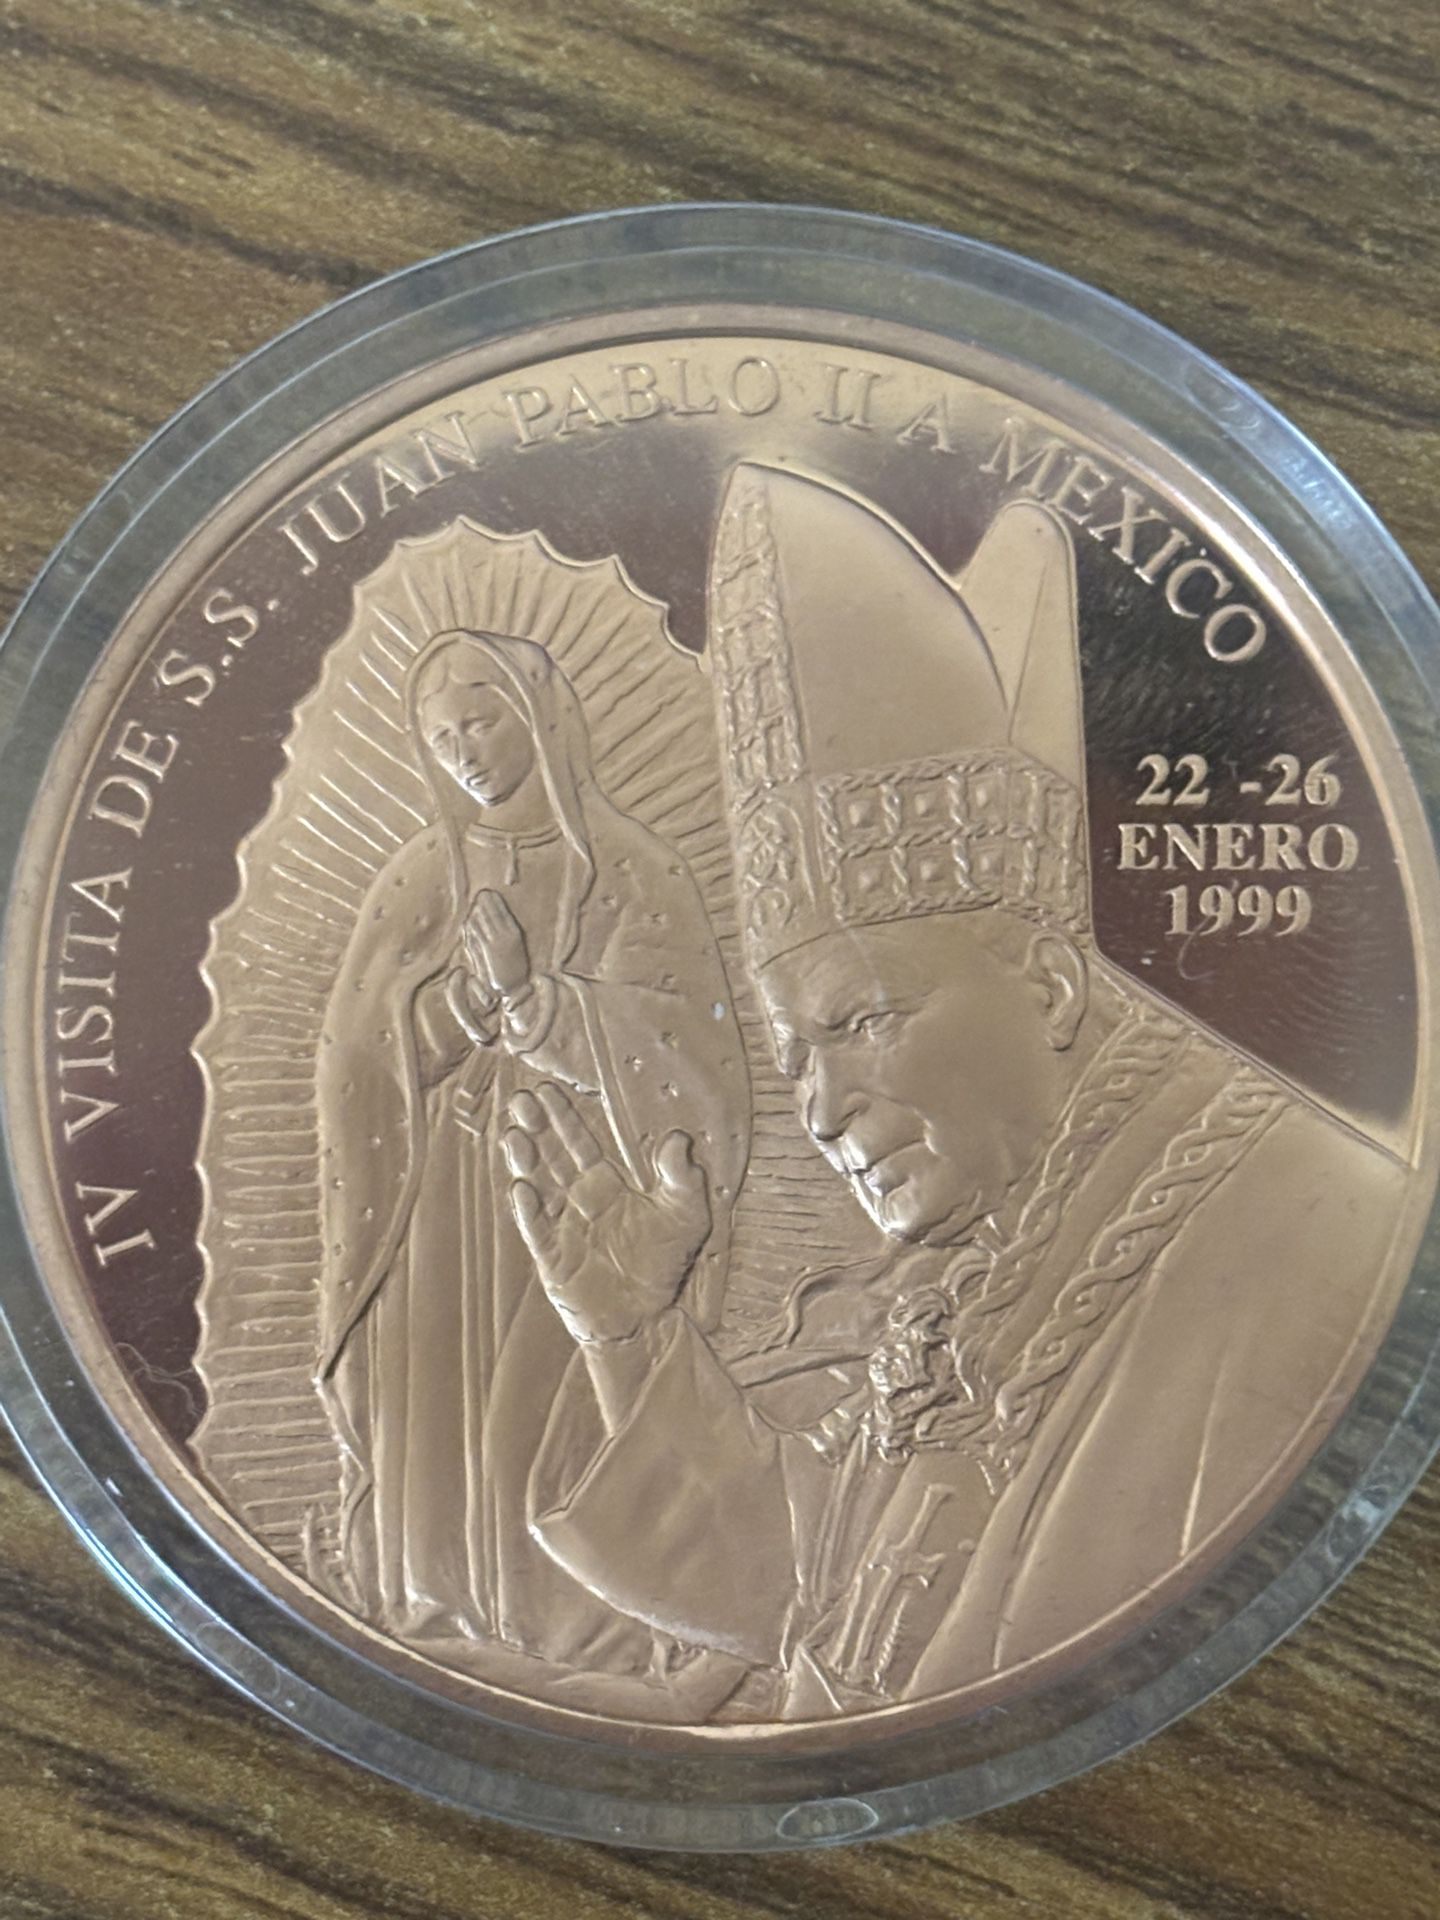 Juan Pablo II 22-26 January 1999 Coin